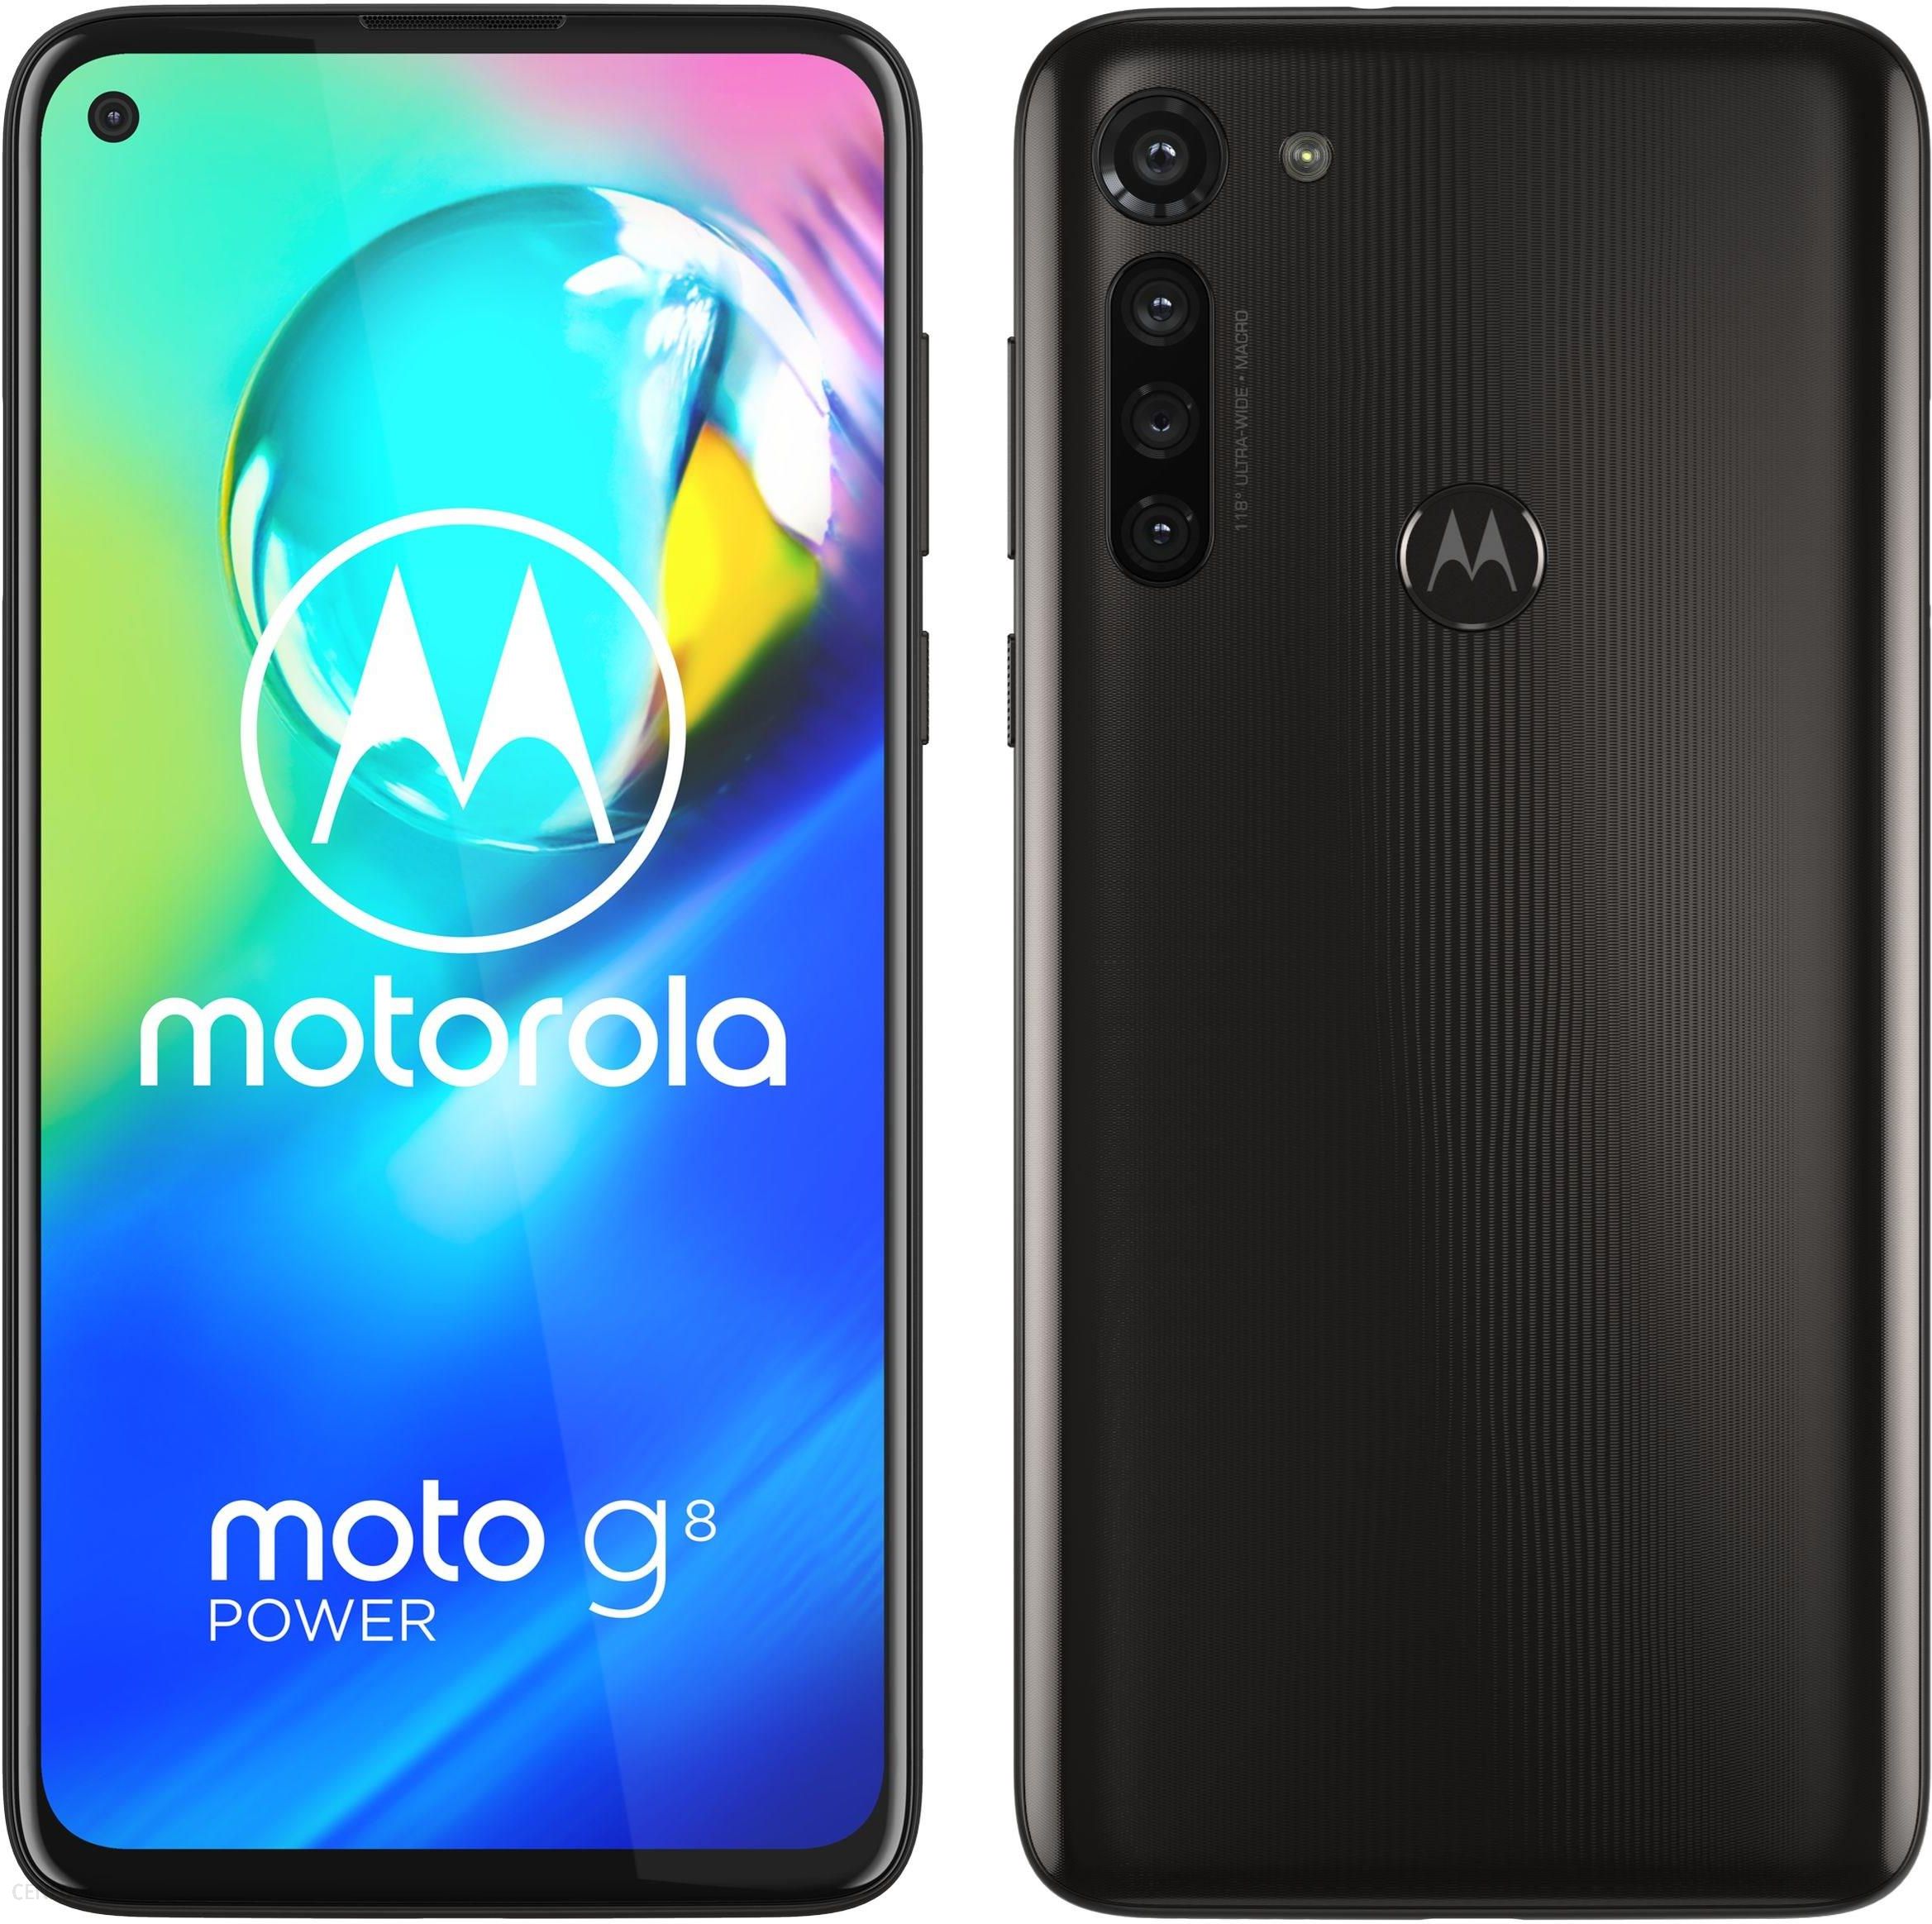  „Motorola Moto G8 Power 4 / 64GB Black“